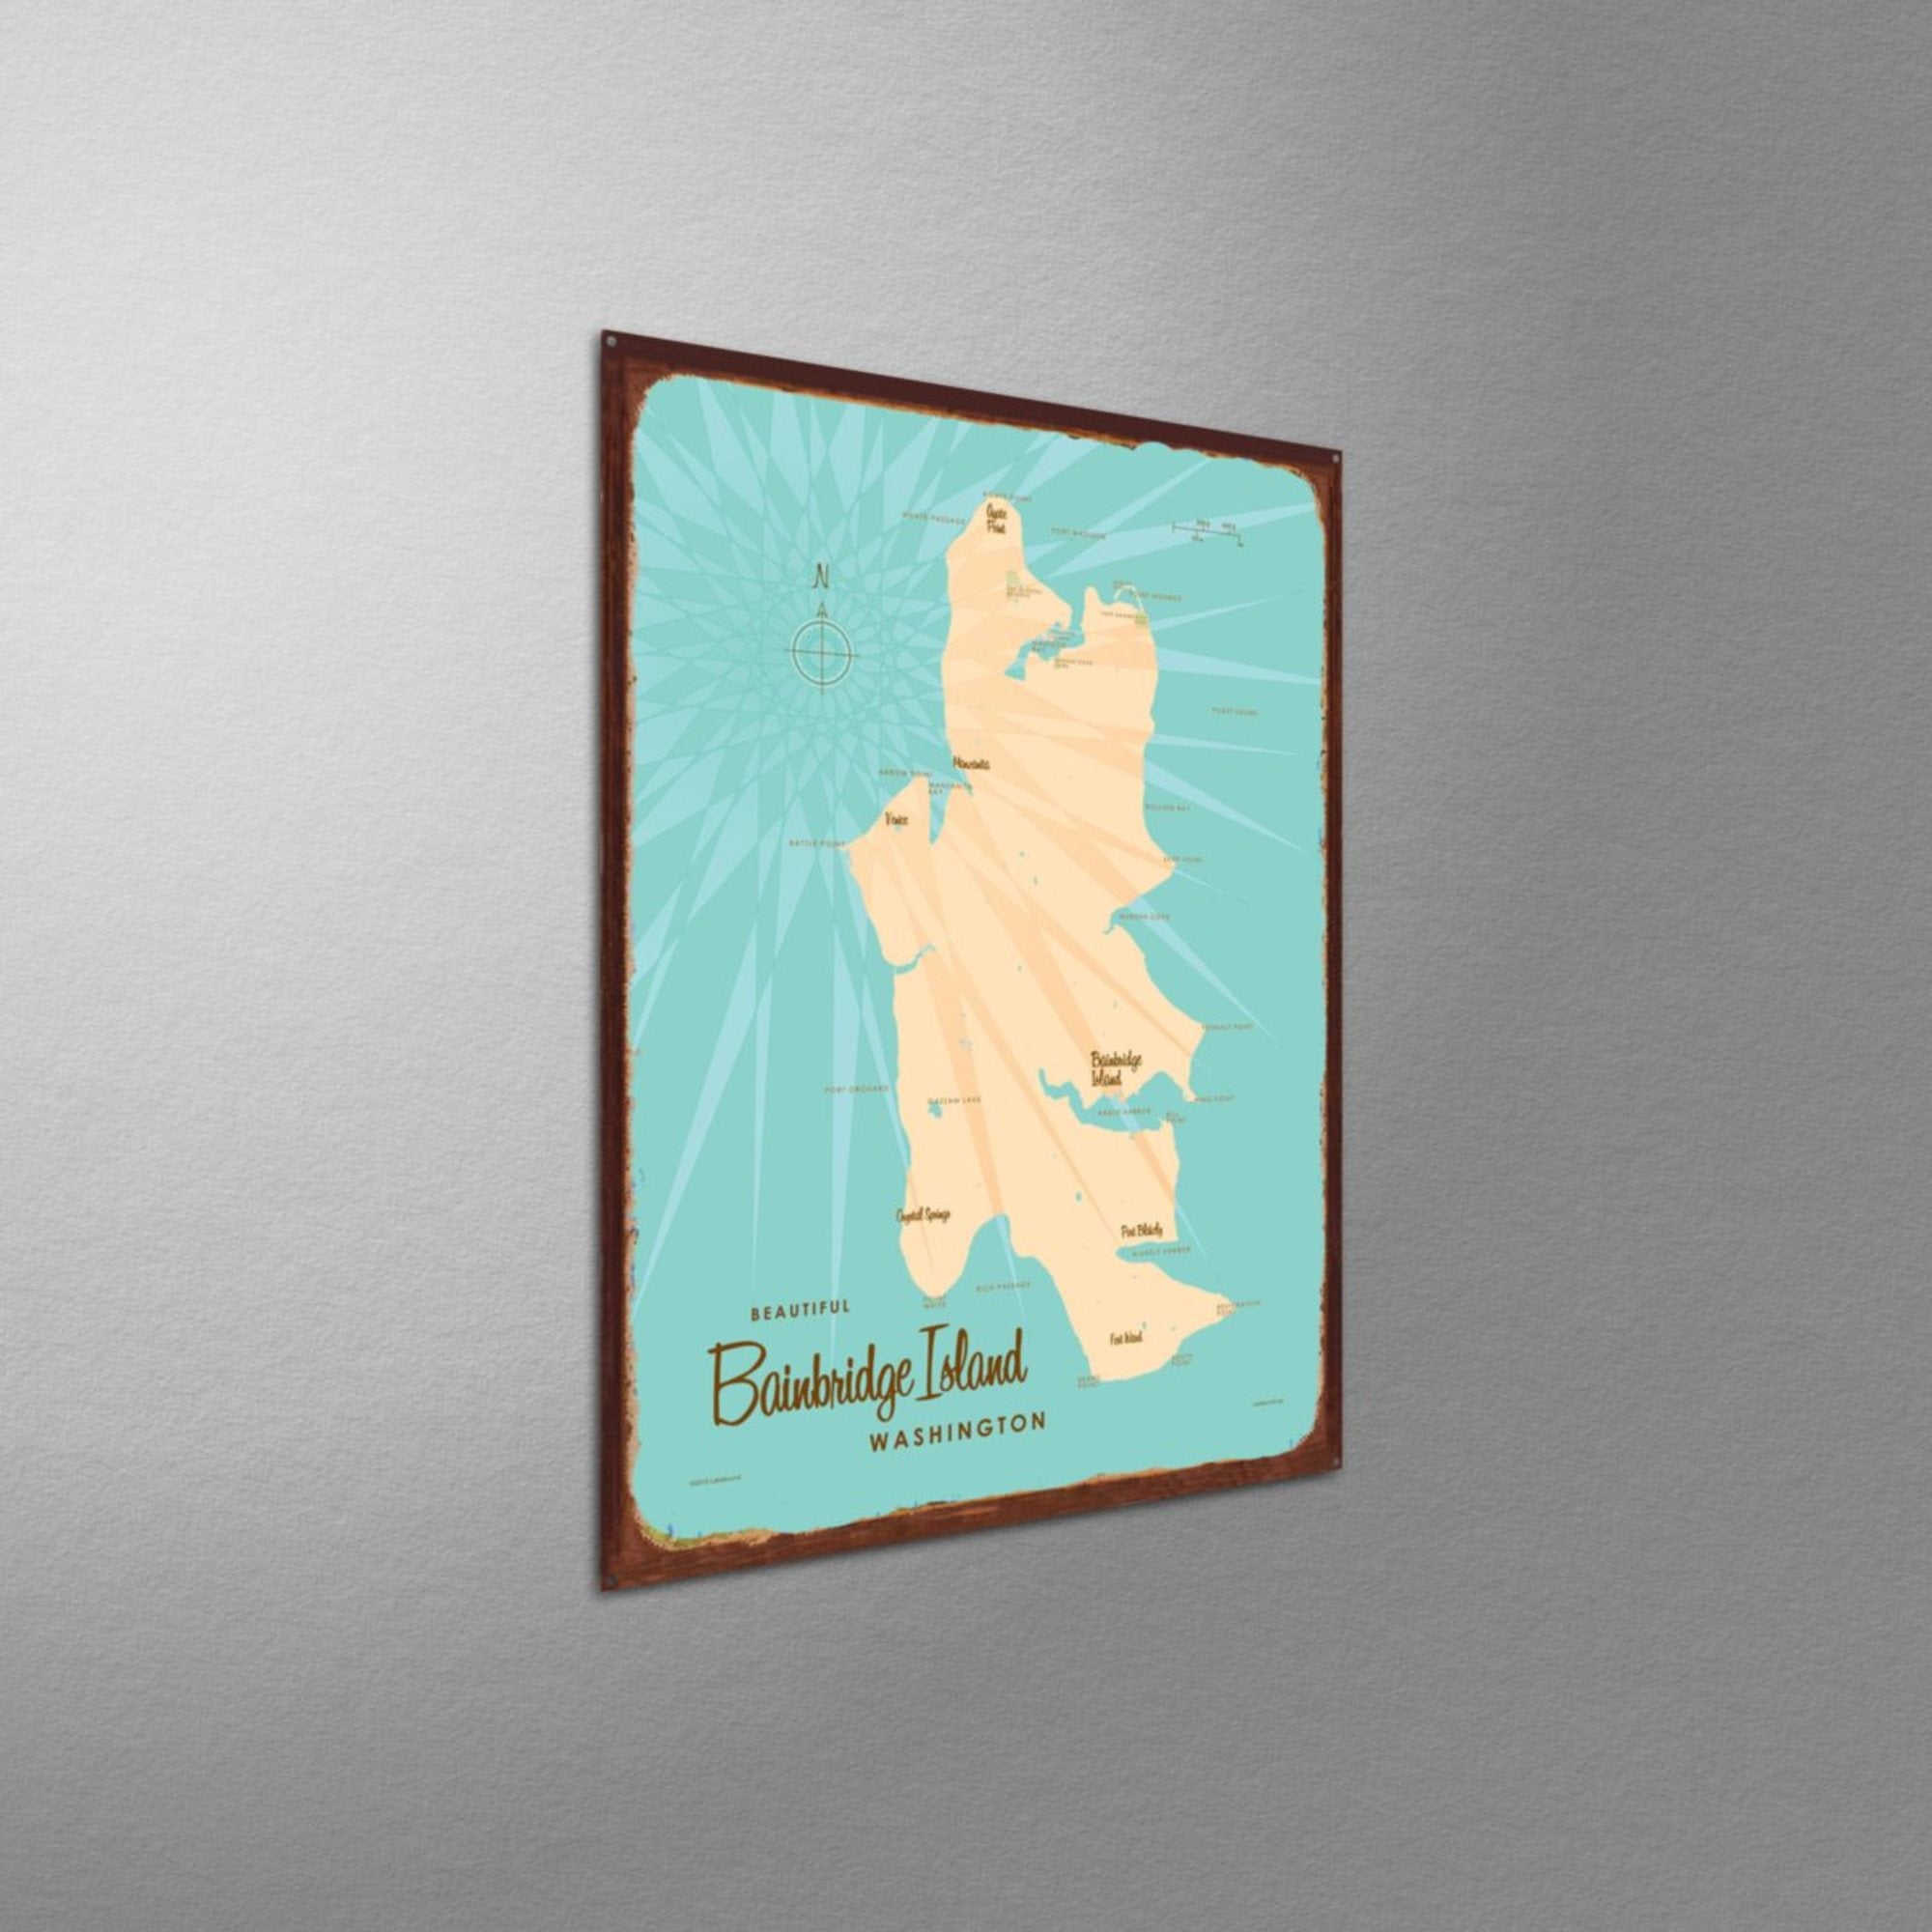 Bainbridge Island Washington, Rustic Metal Sign Map Art